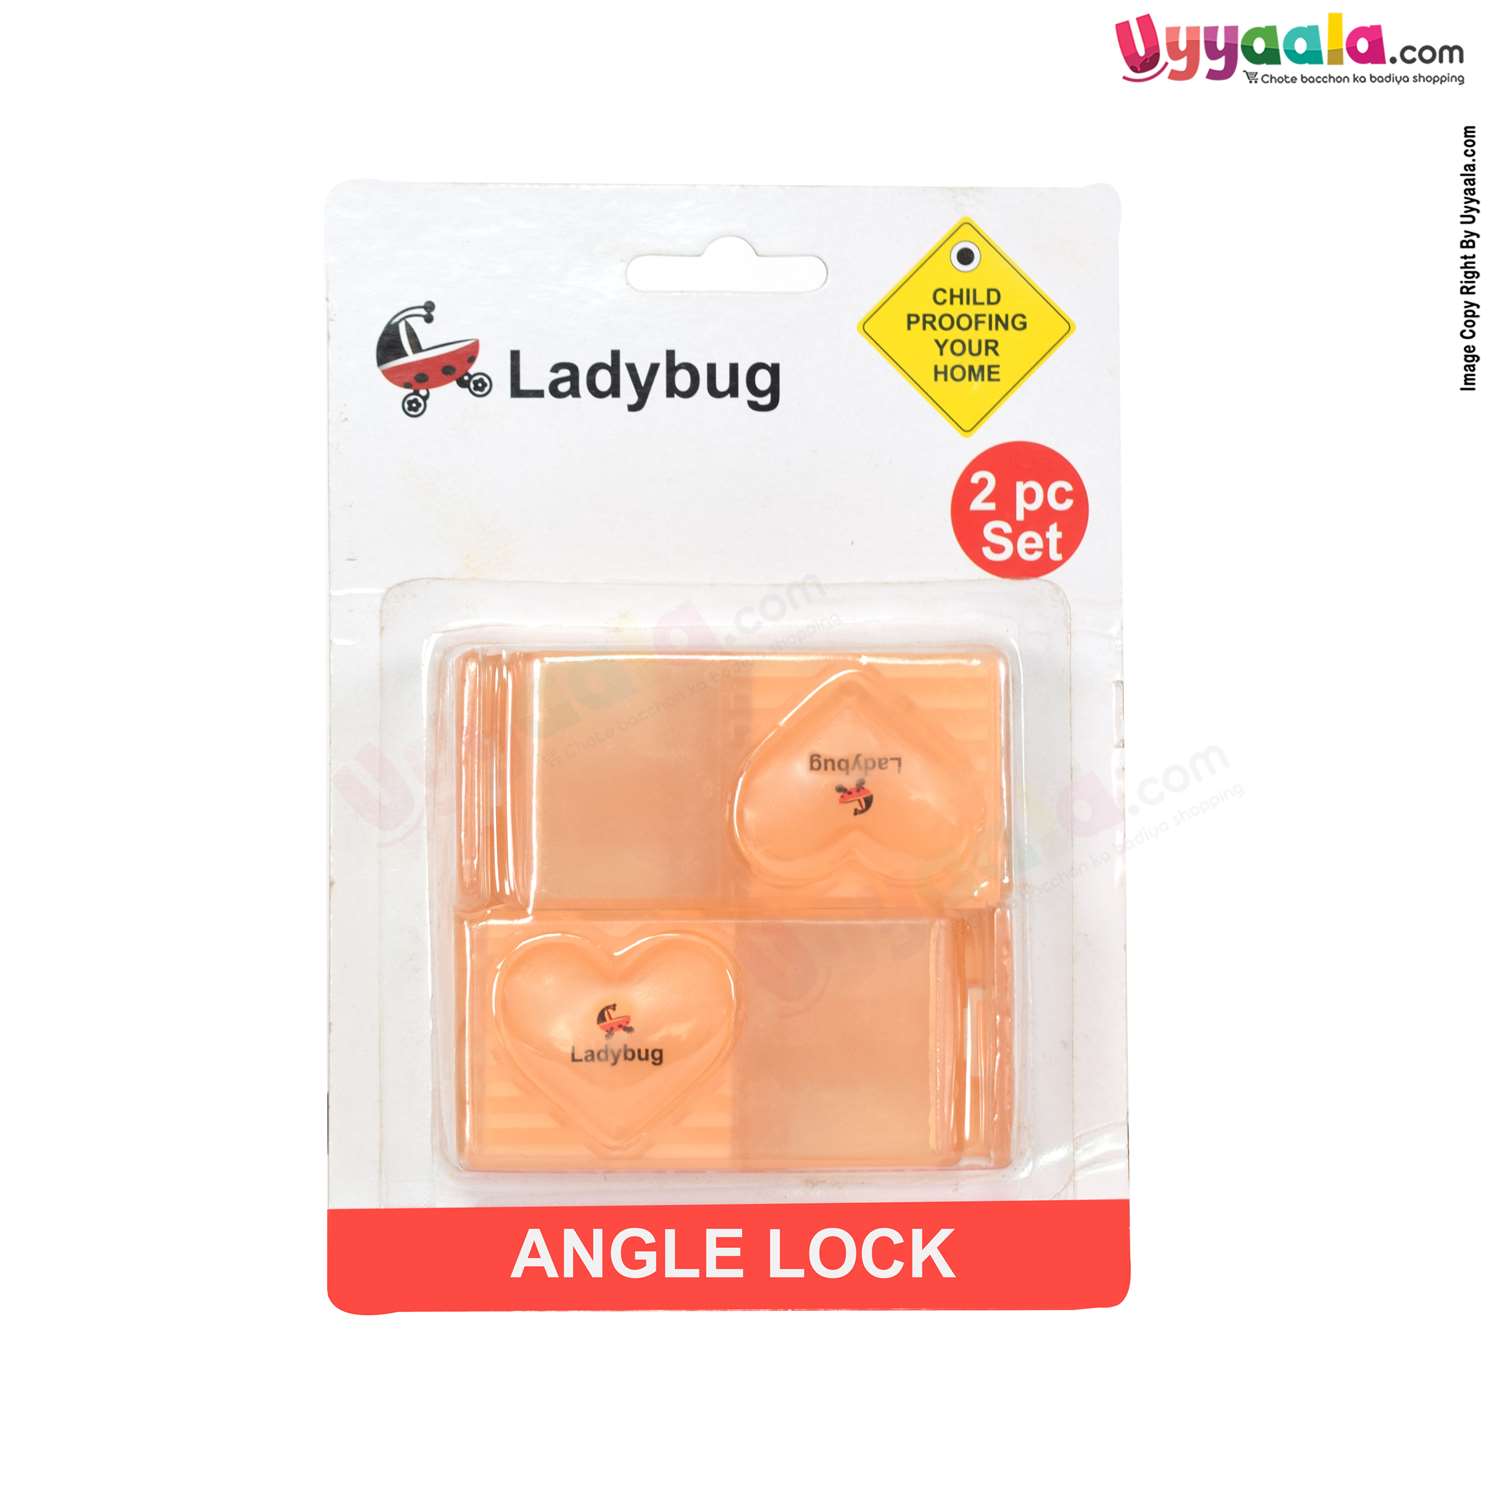 LADY BUG Angle Lock For Corner - 2pc Set